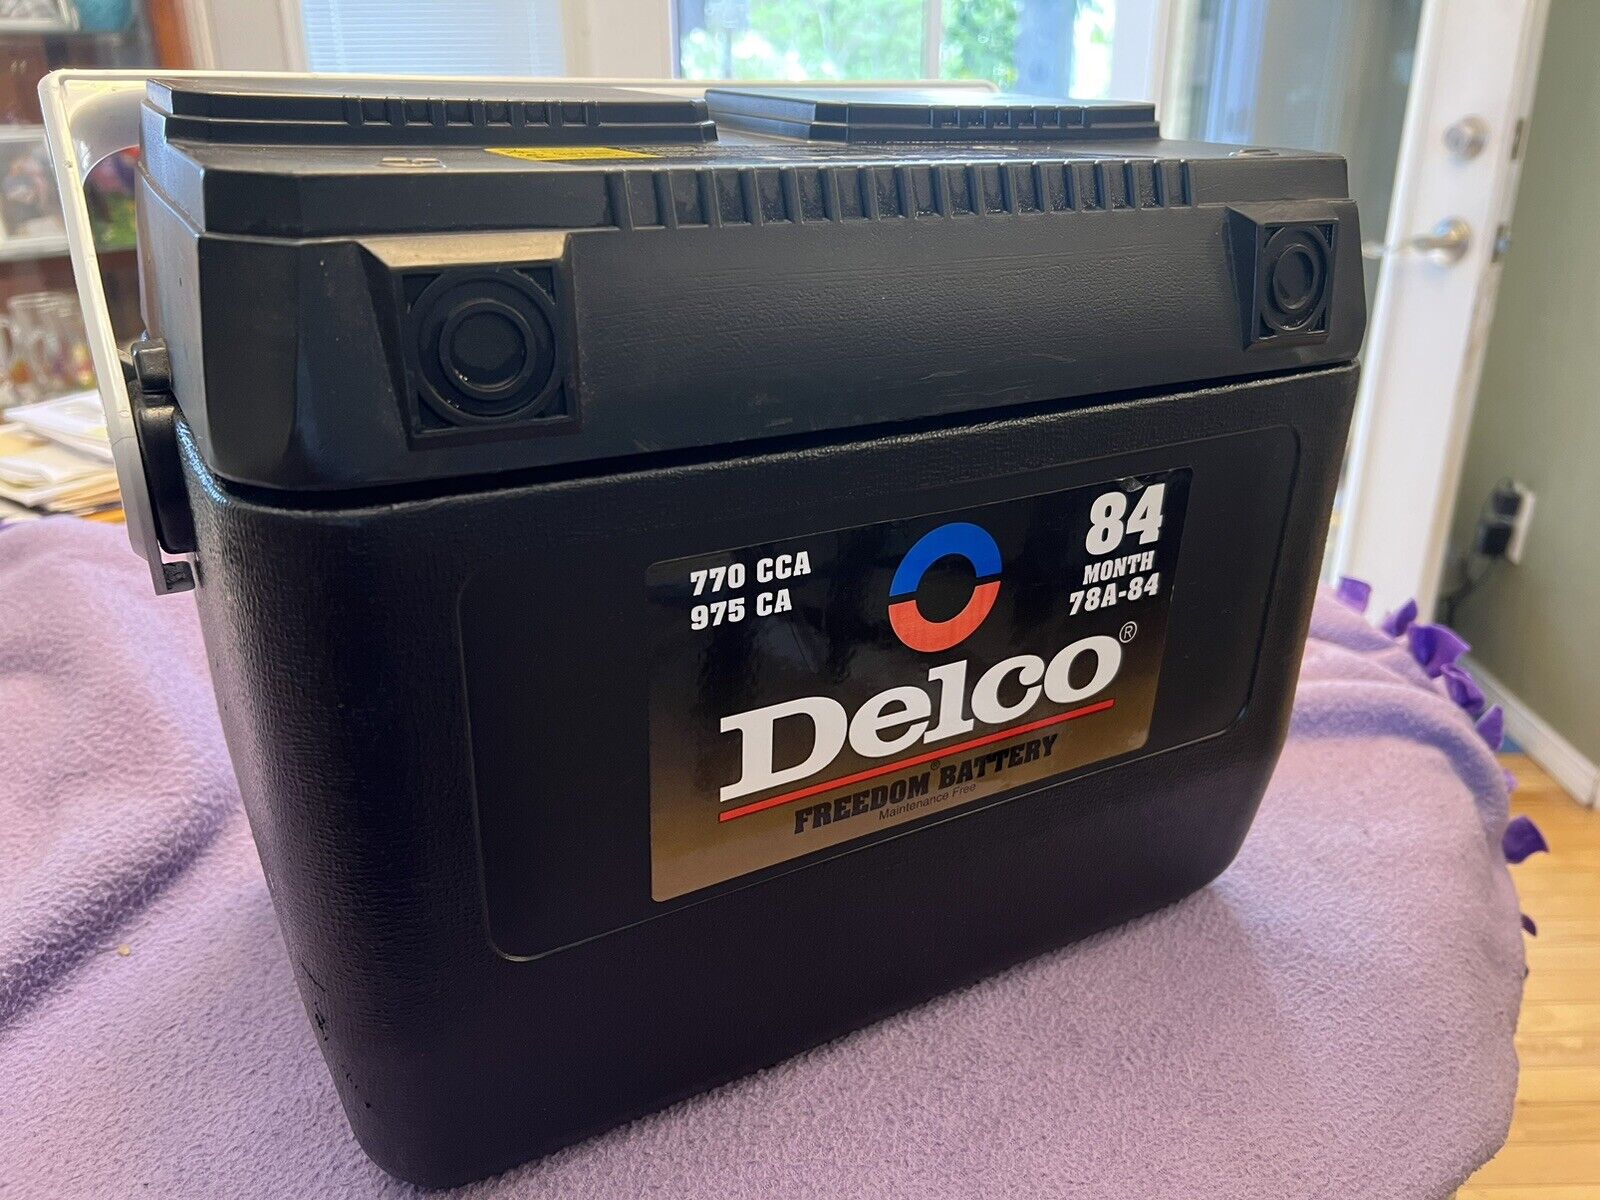 Vintage AC Delco Promotional Cooler